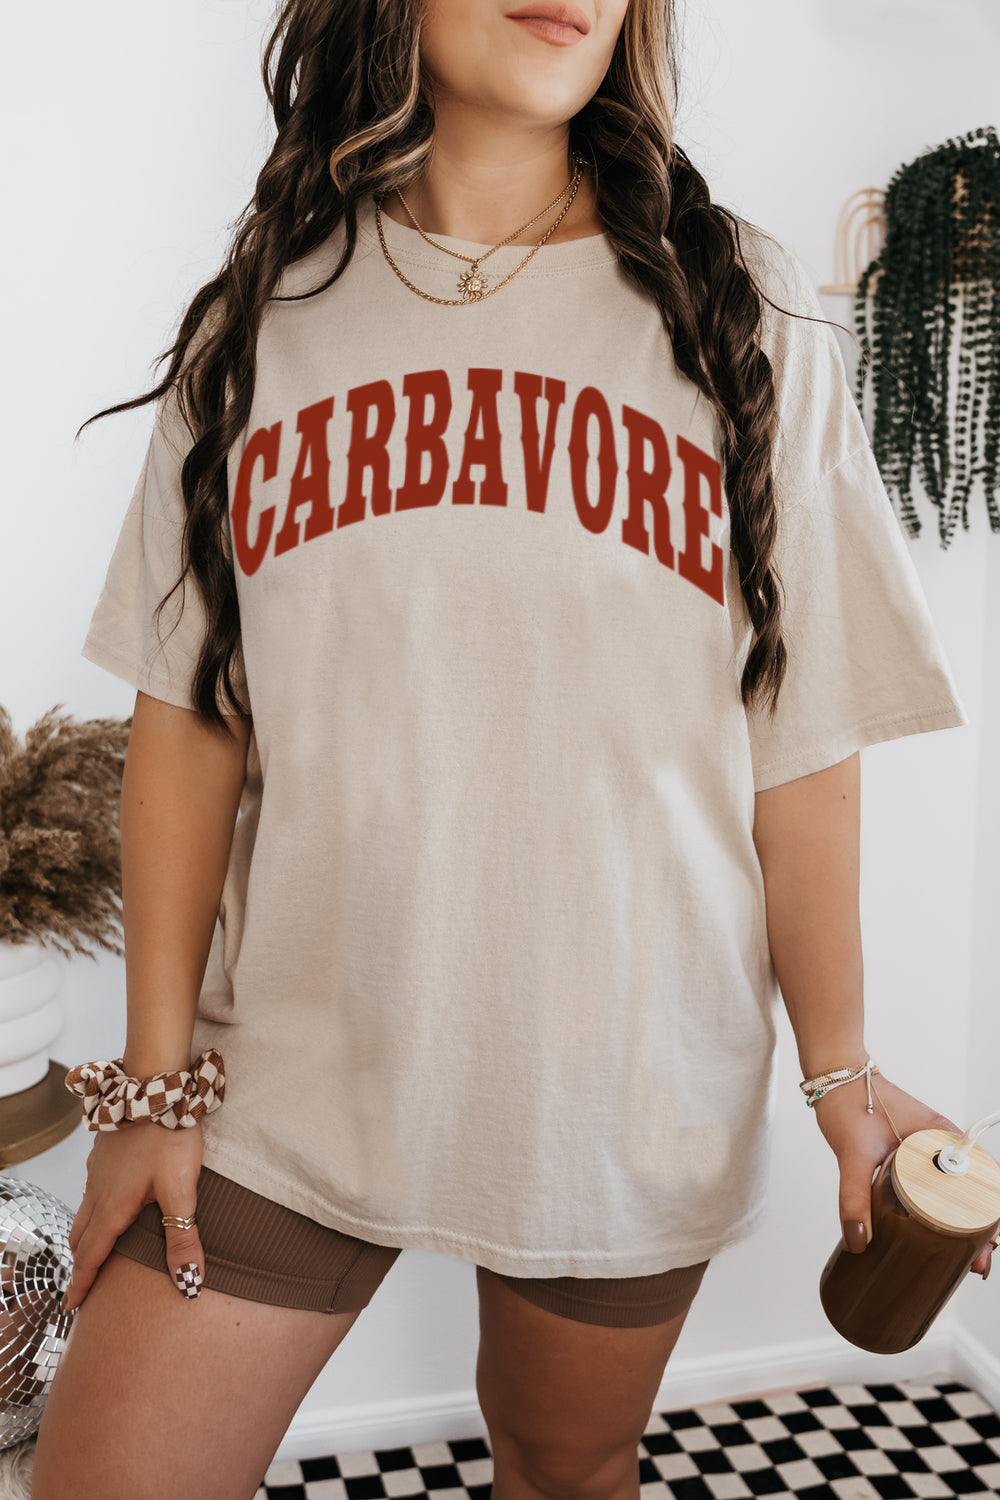 Carbavore Women's Casual T-Shirt